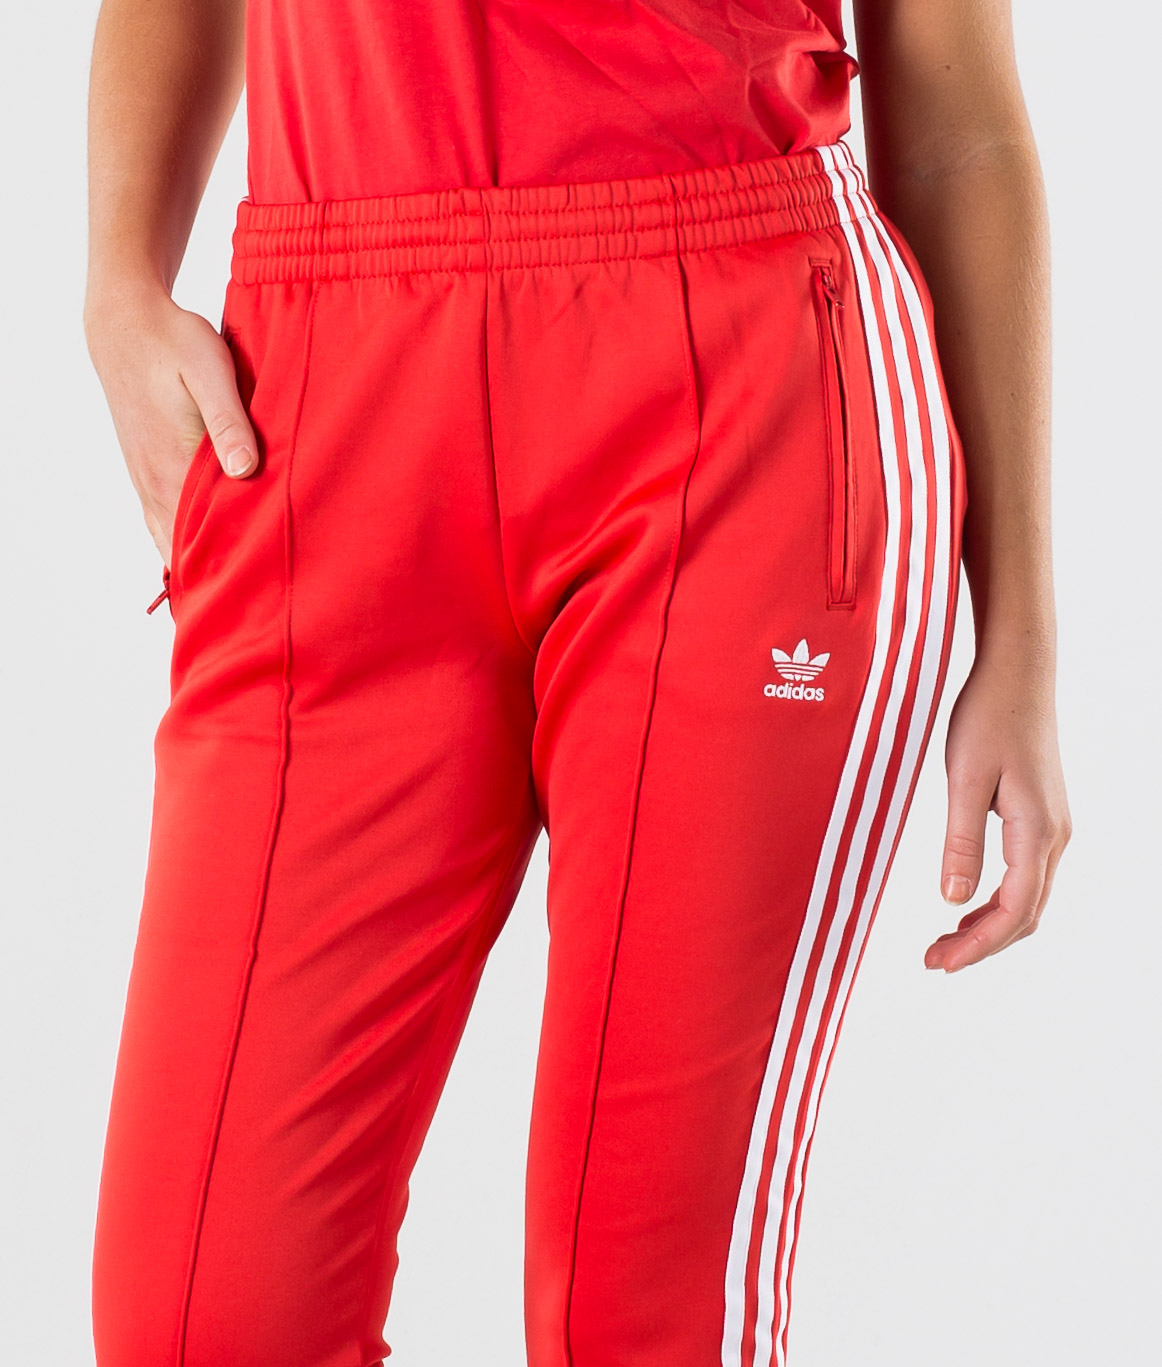 adidas lush red pants